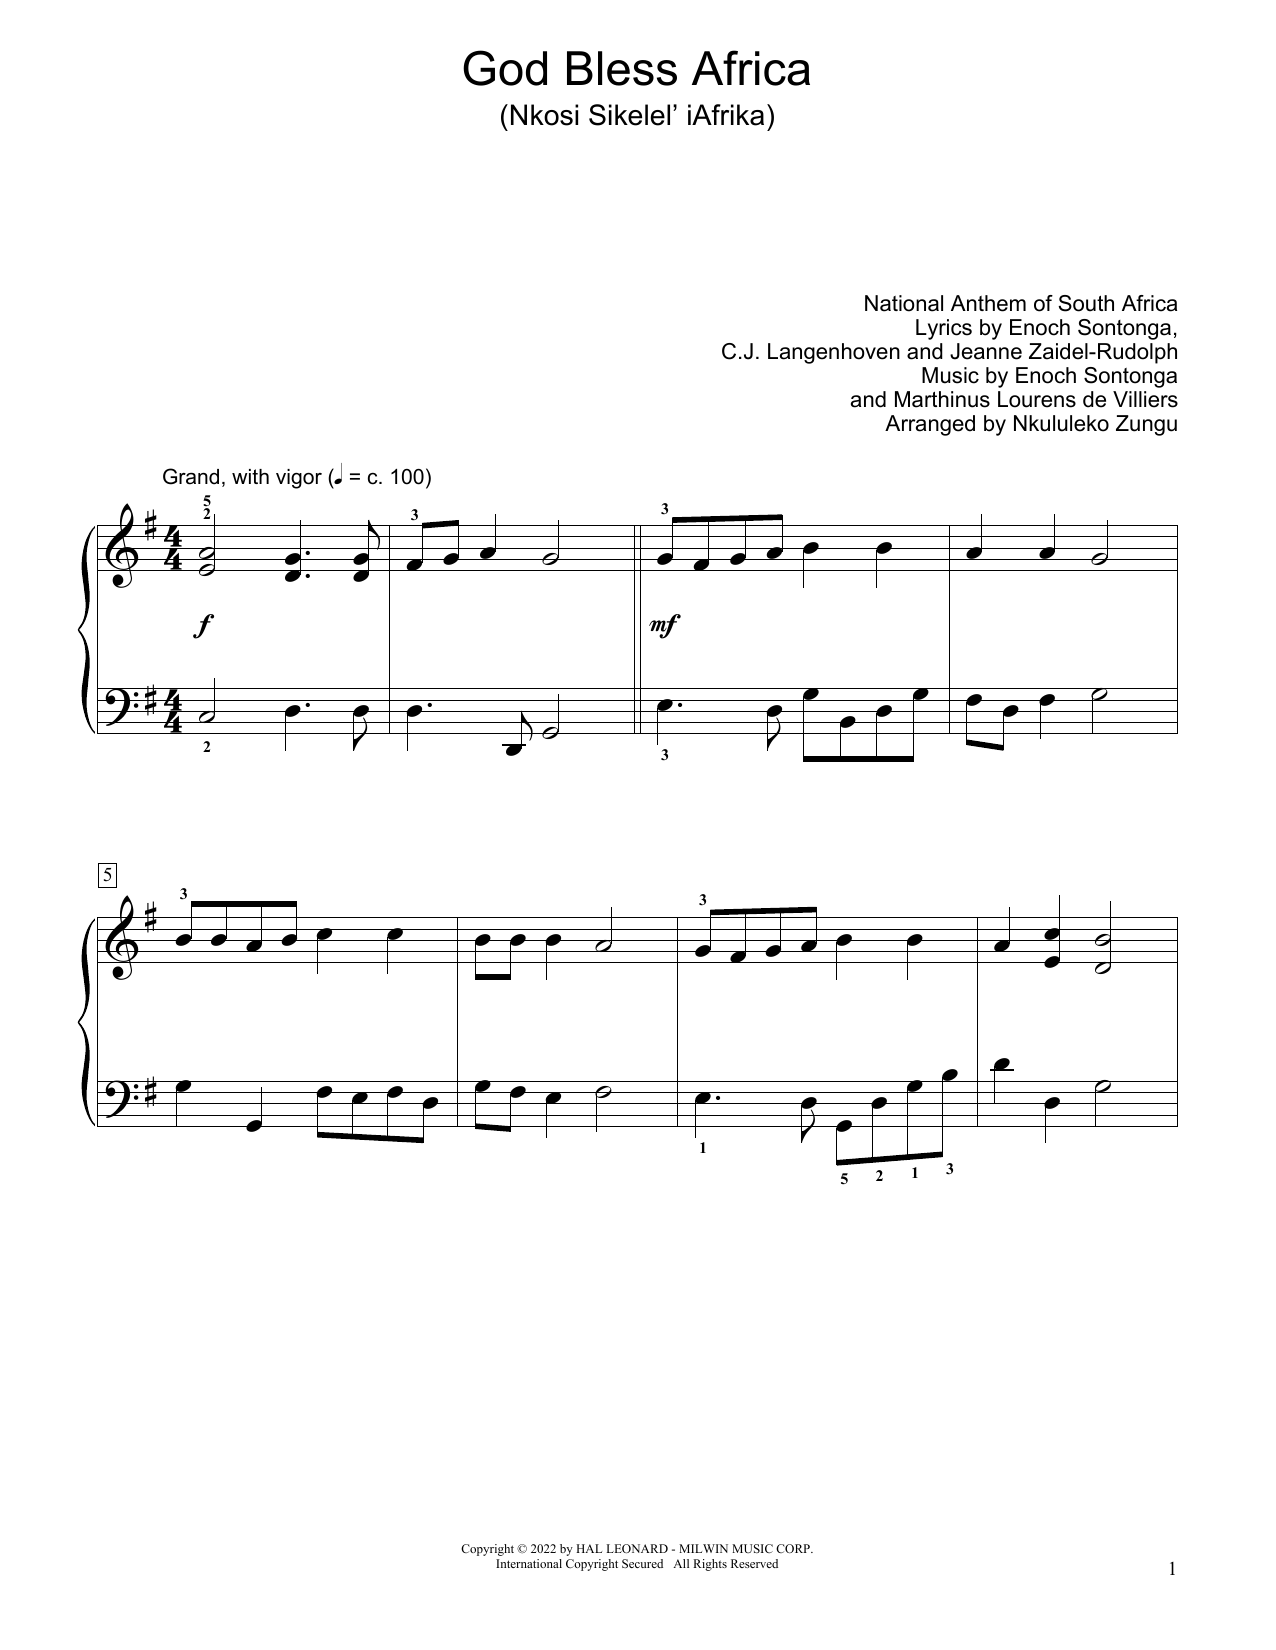 God Bless Africa (Nkosi Sikelel' Iafrika) (arr. Nkululeko Zungu) (Educational Piano) von National Anthem of South Africa